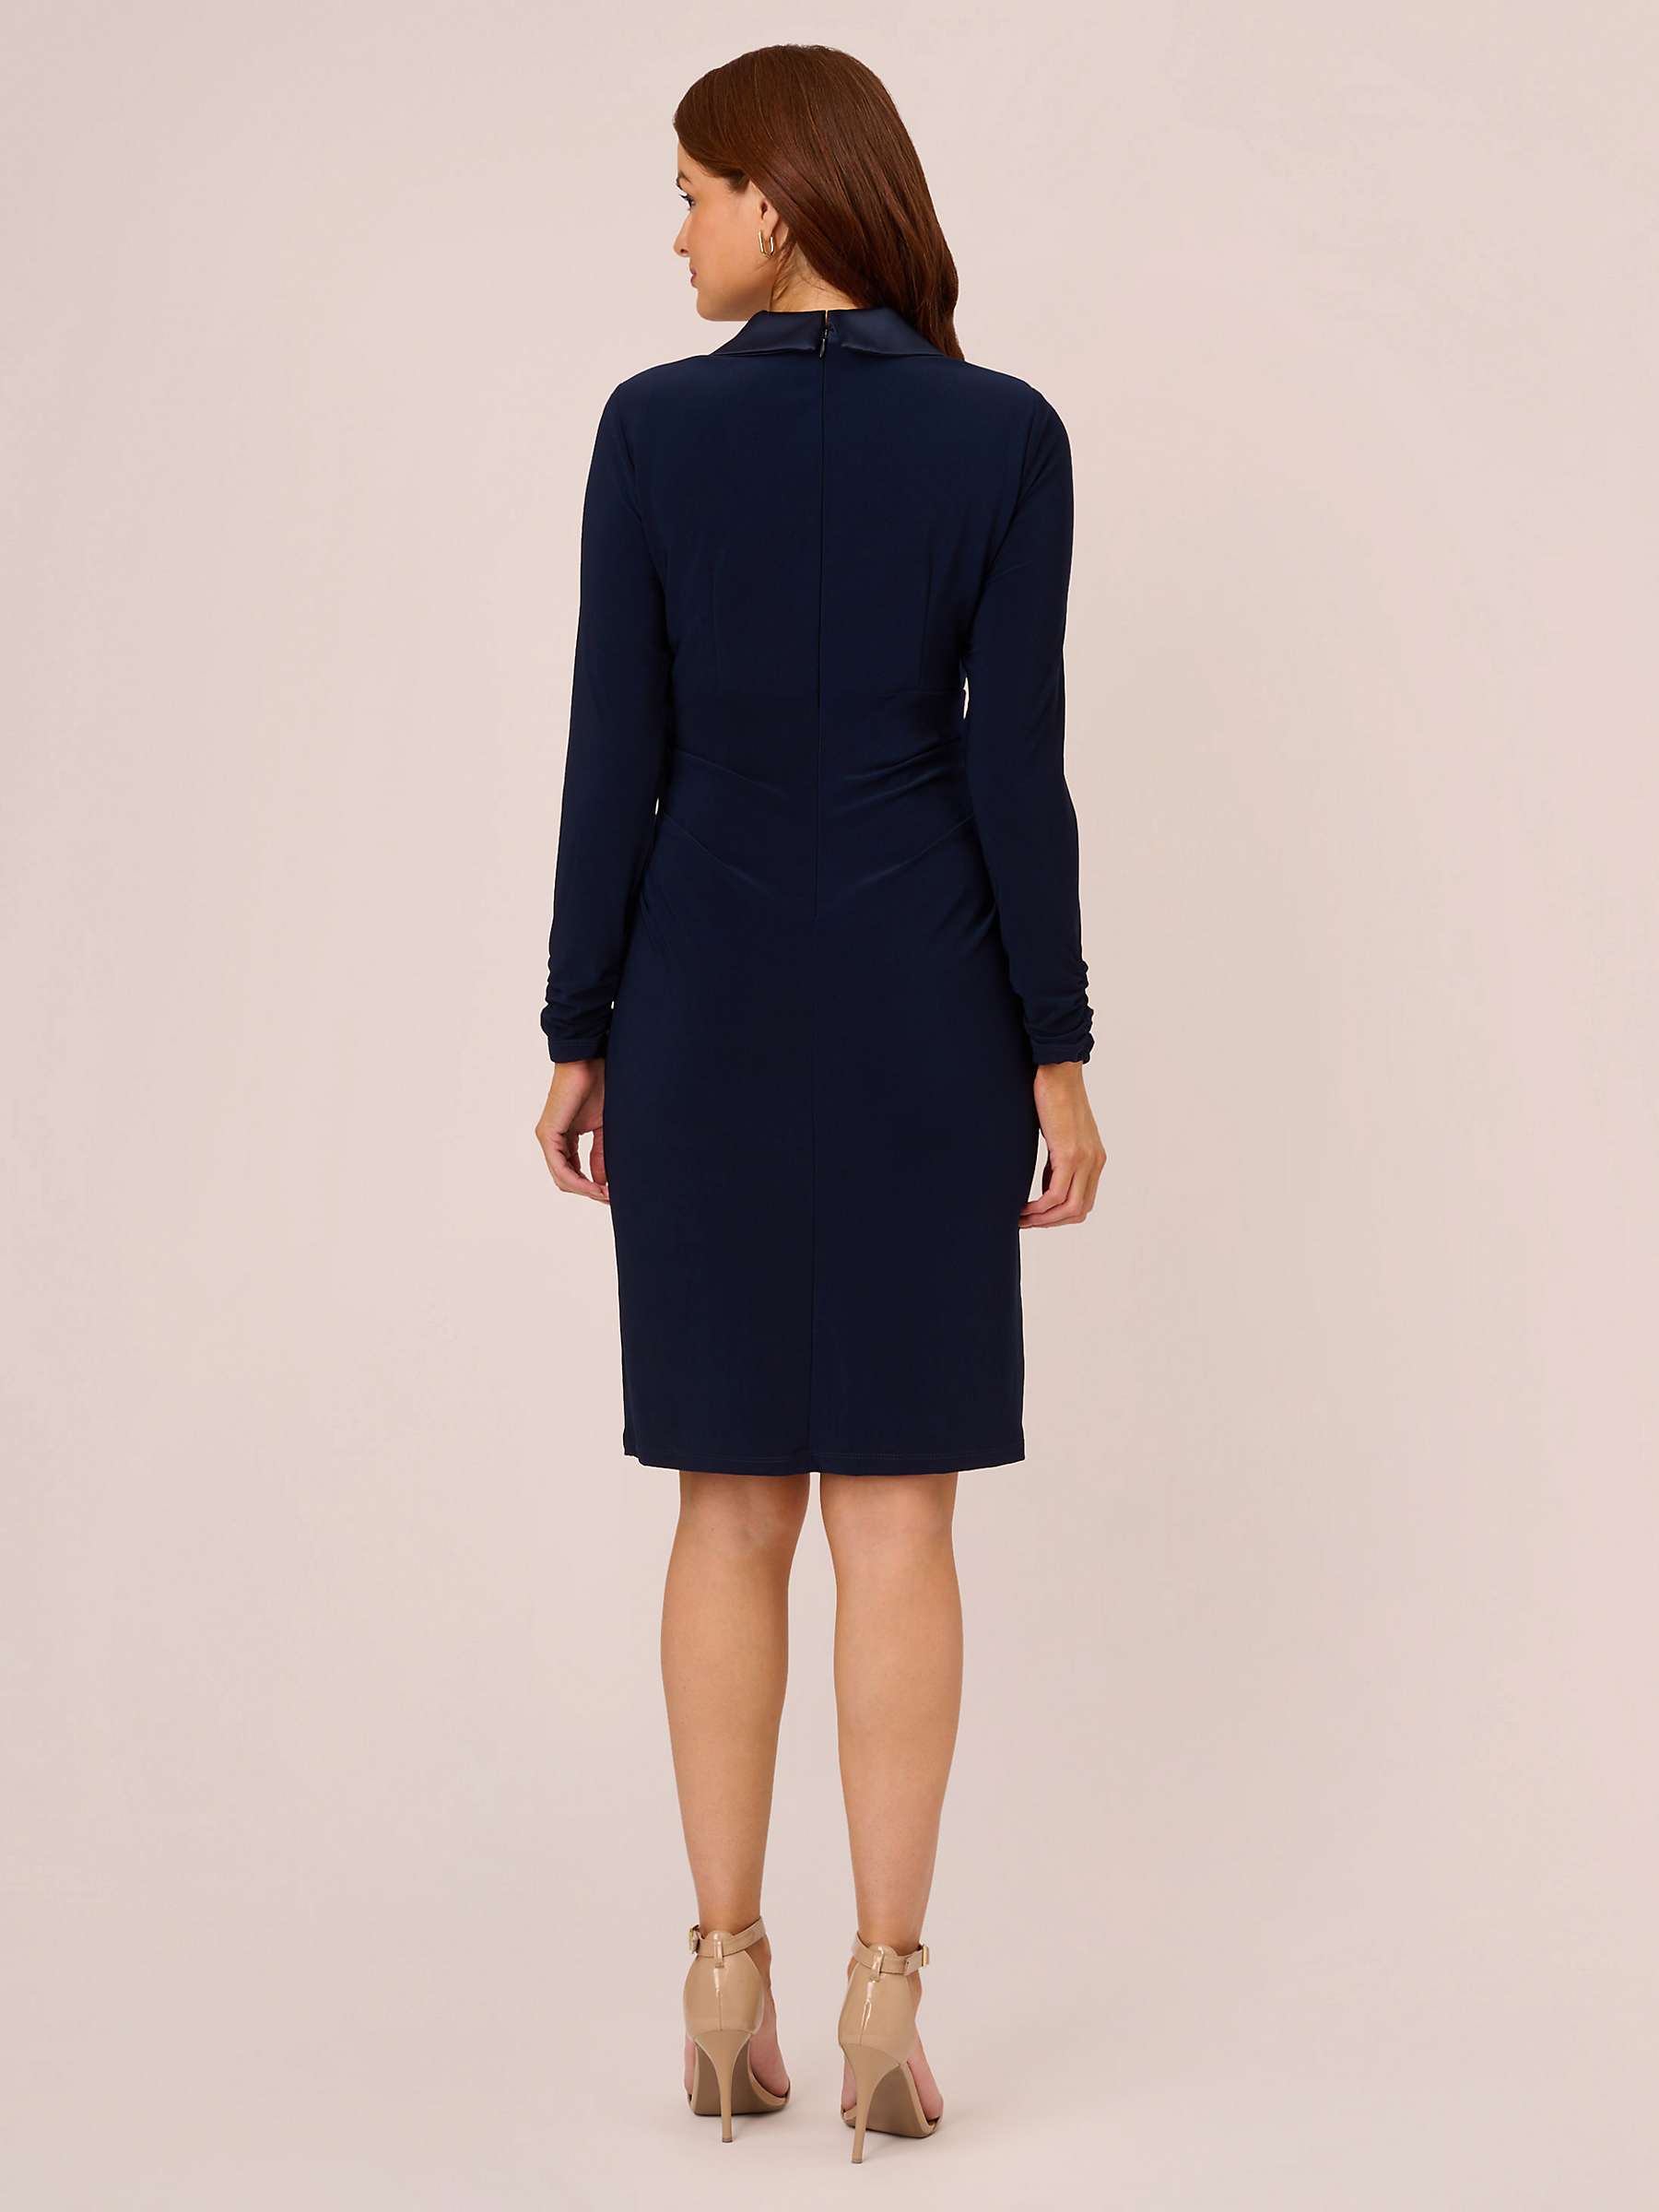 Buy Adrianna Papell Tuxedo Knee Length Dress, Midnight Online at johnlewis.com